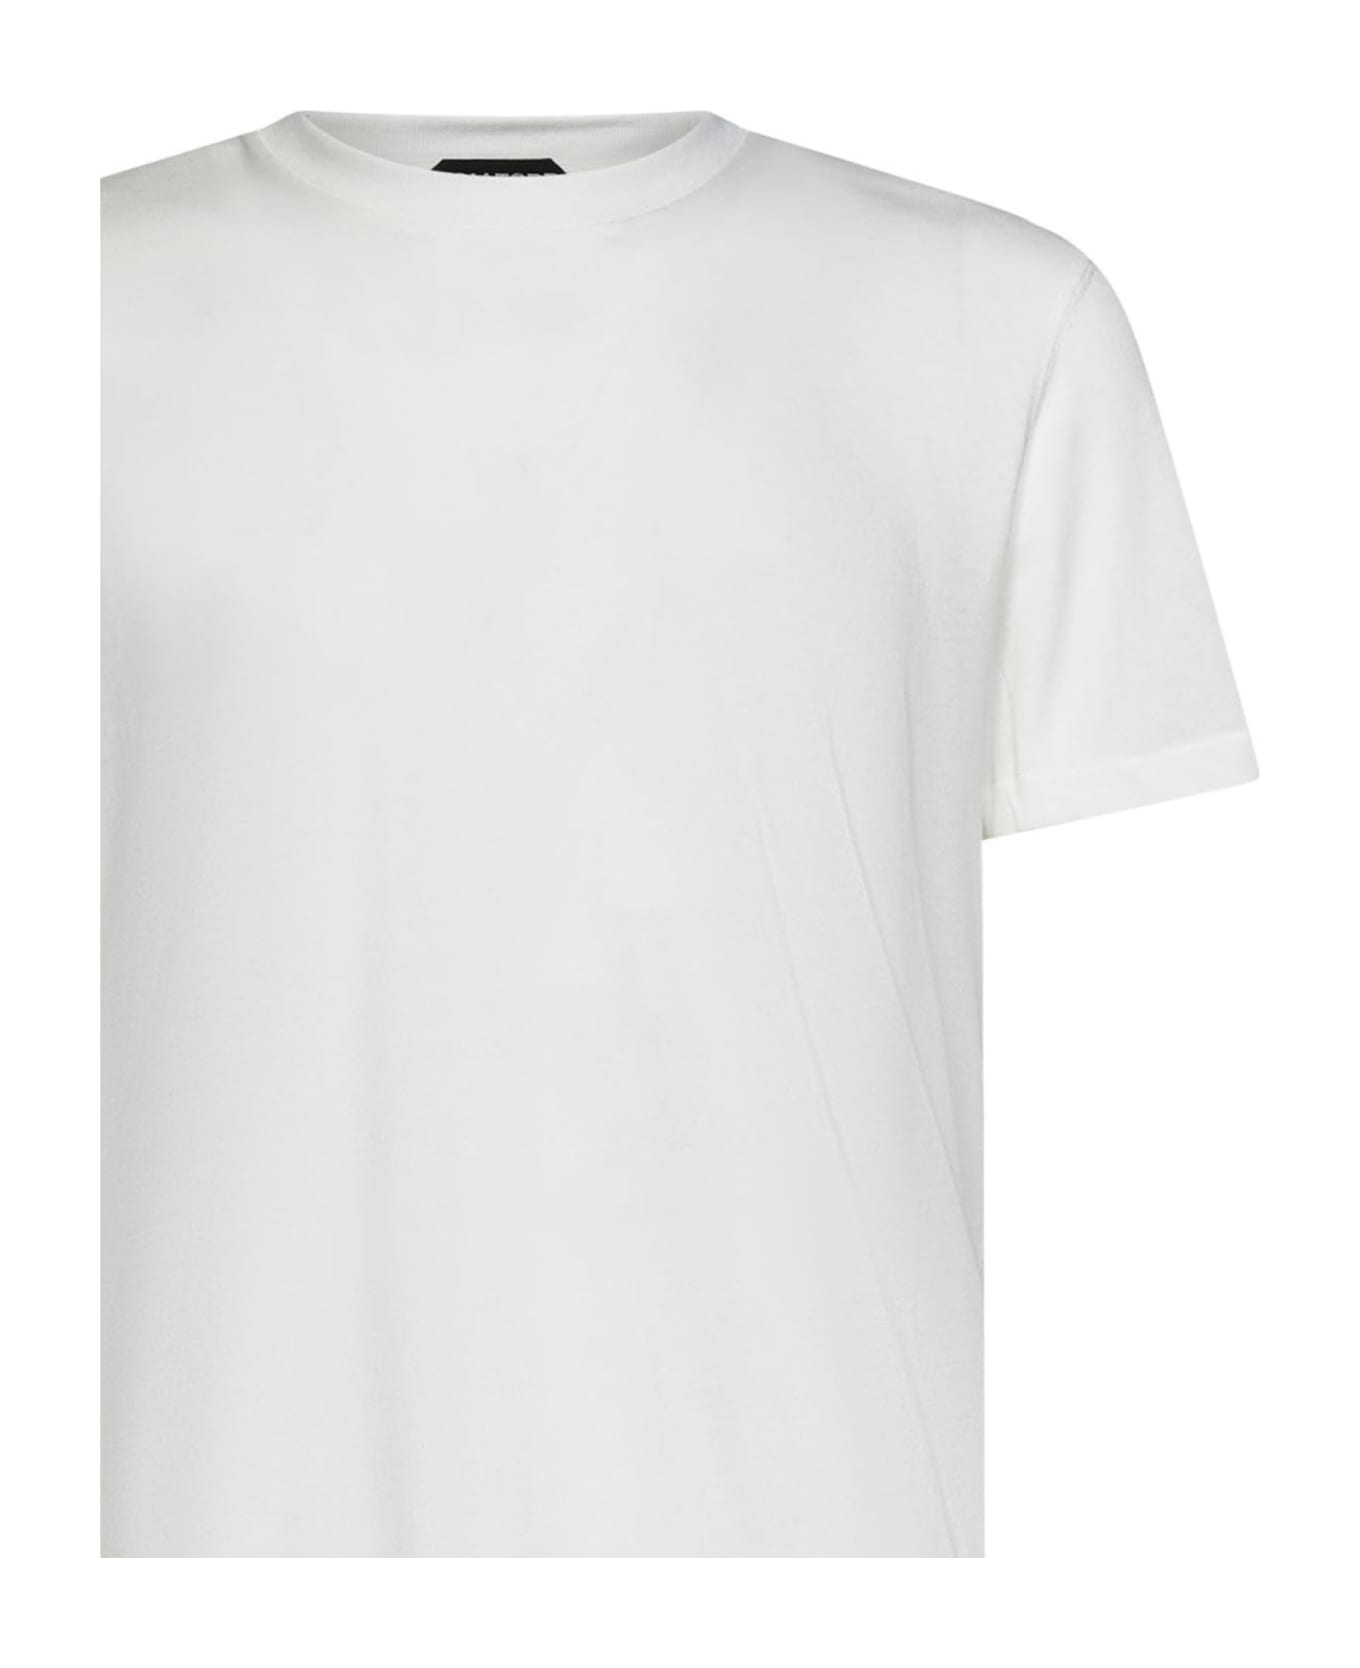 Tom Ford T-shirt - White シャツ